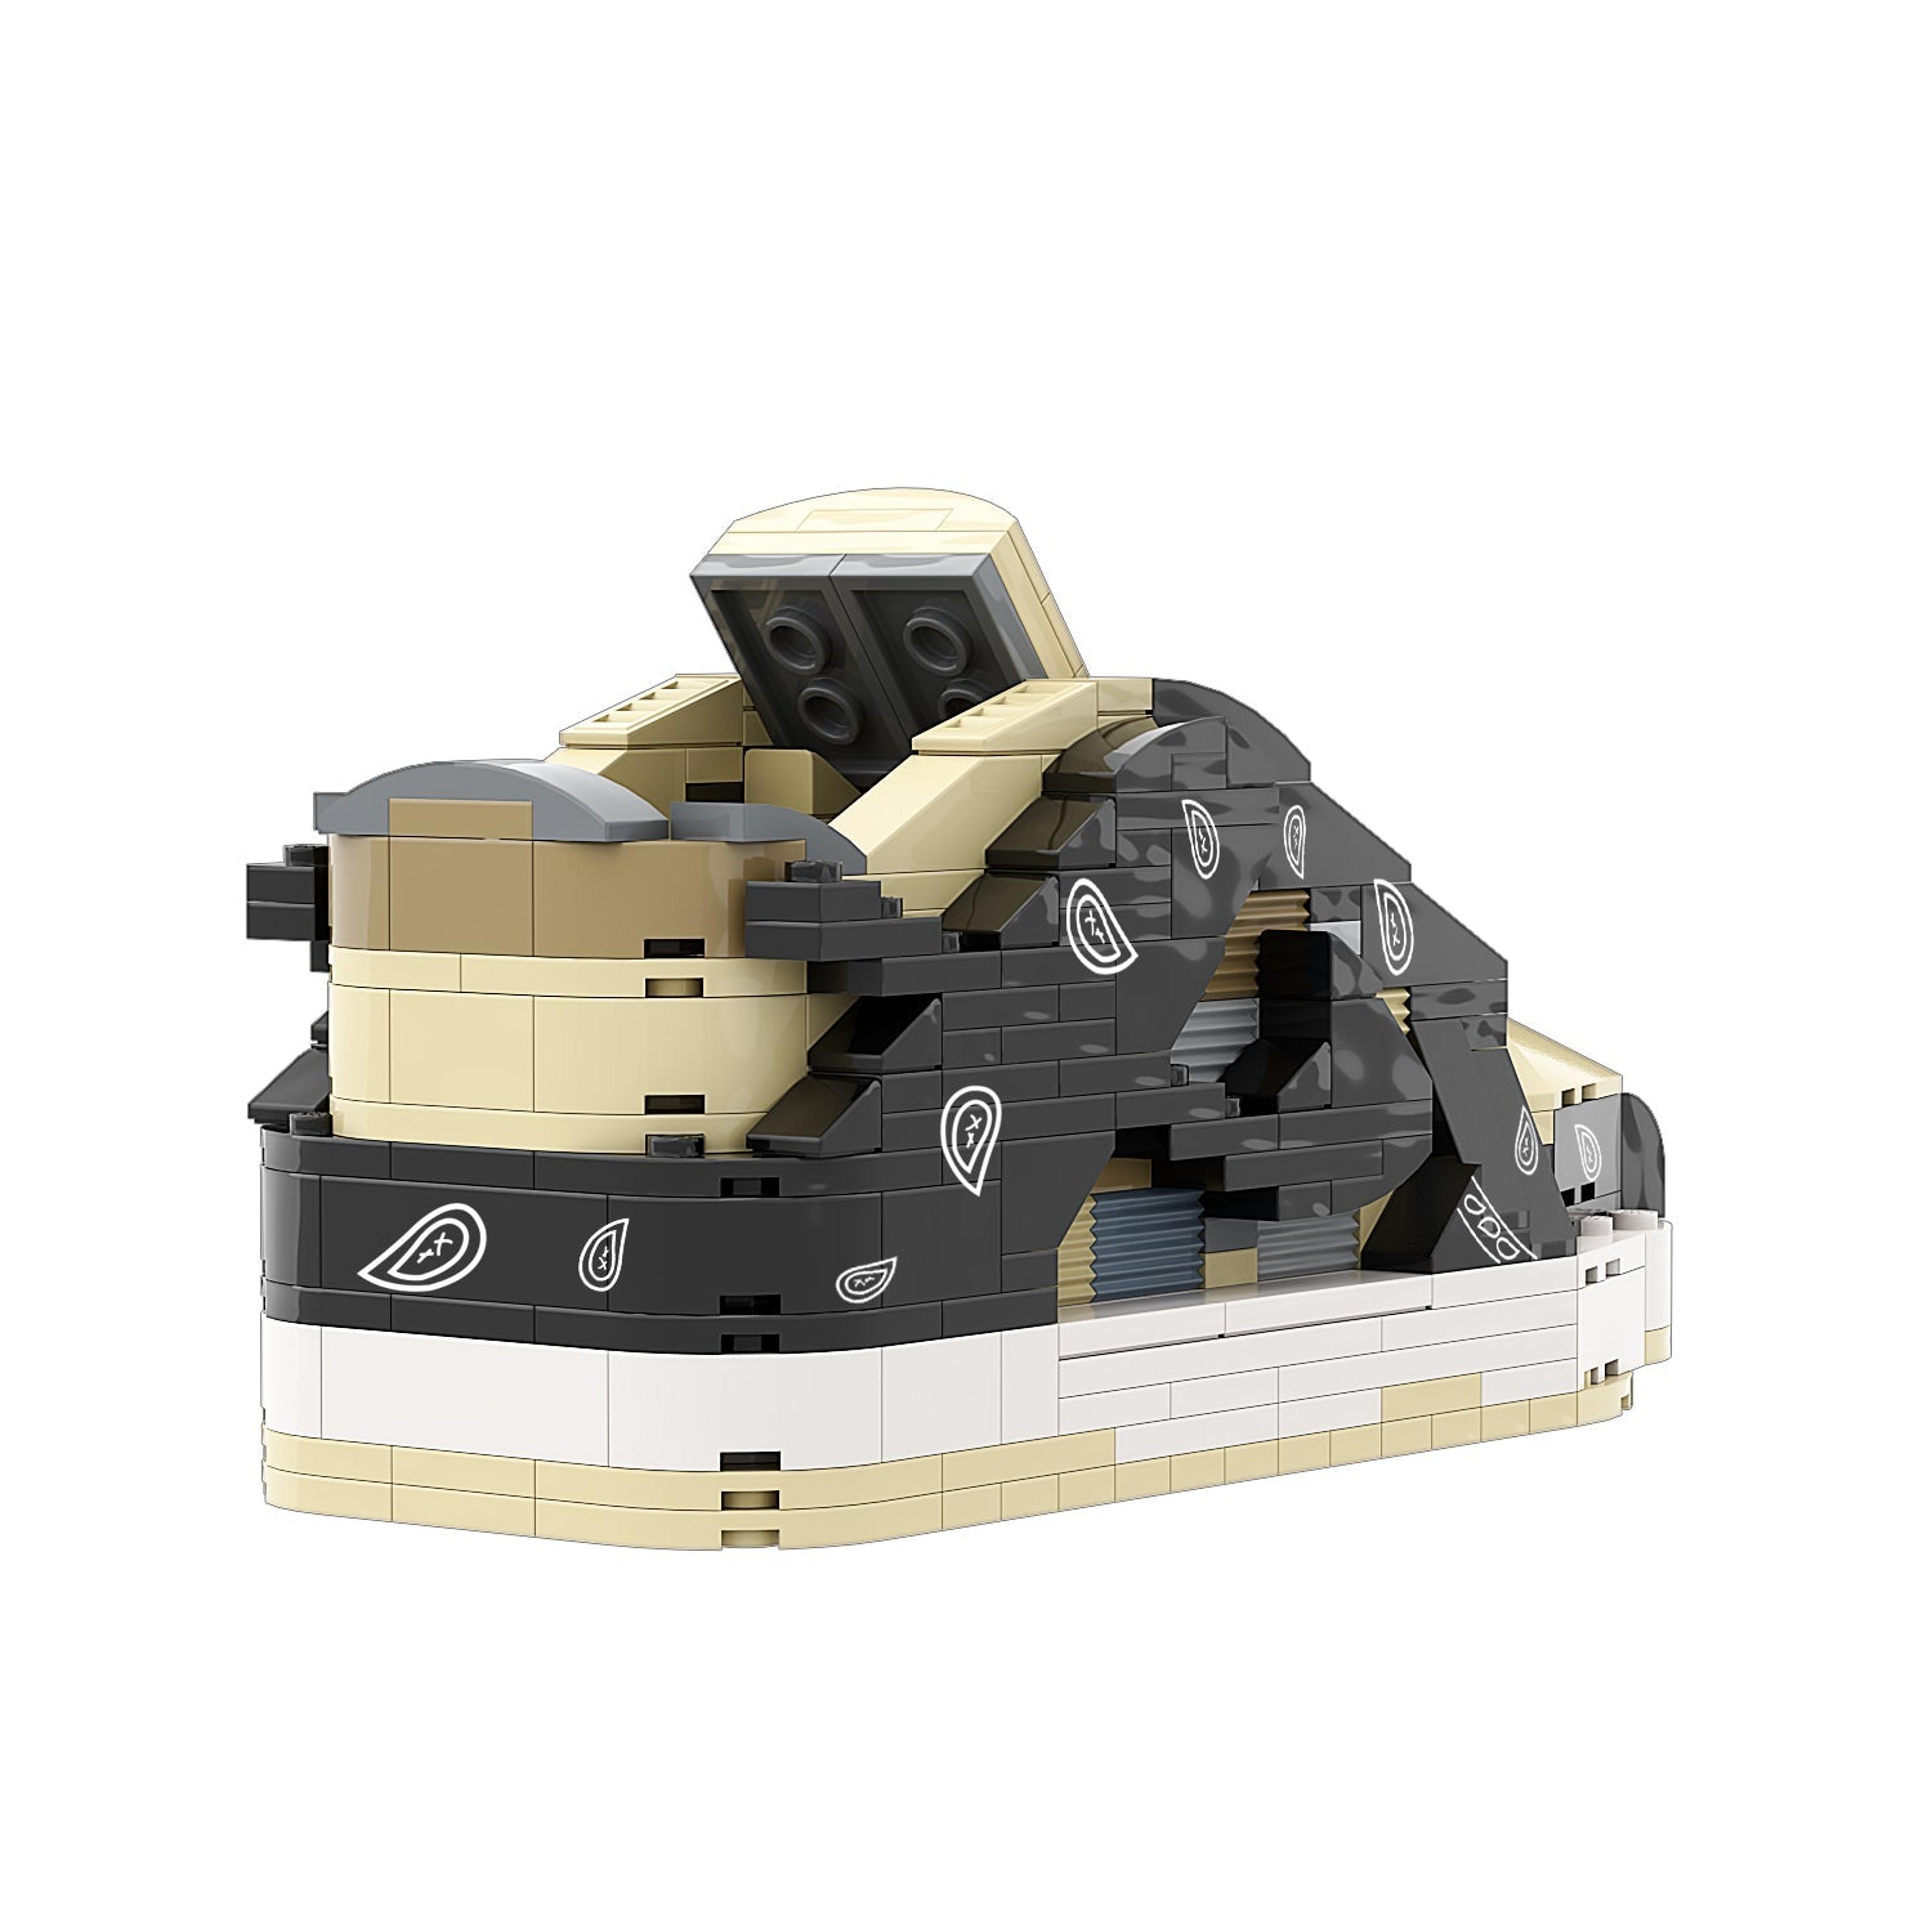 Alternate View 7 of REGULAR  "SB Dunk Travis Scott" Sneaker Bricks with Mini Figure